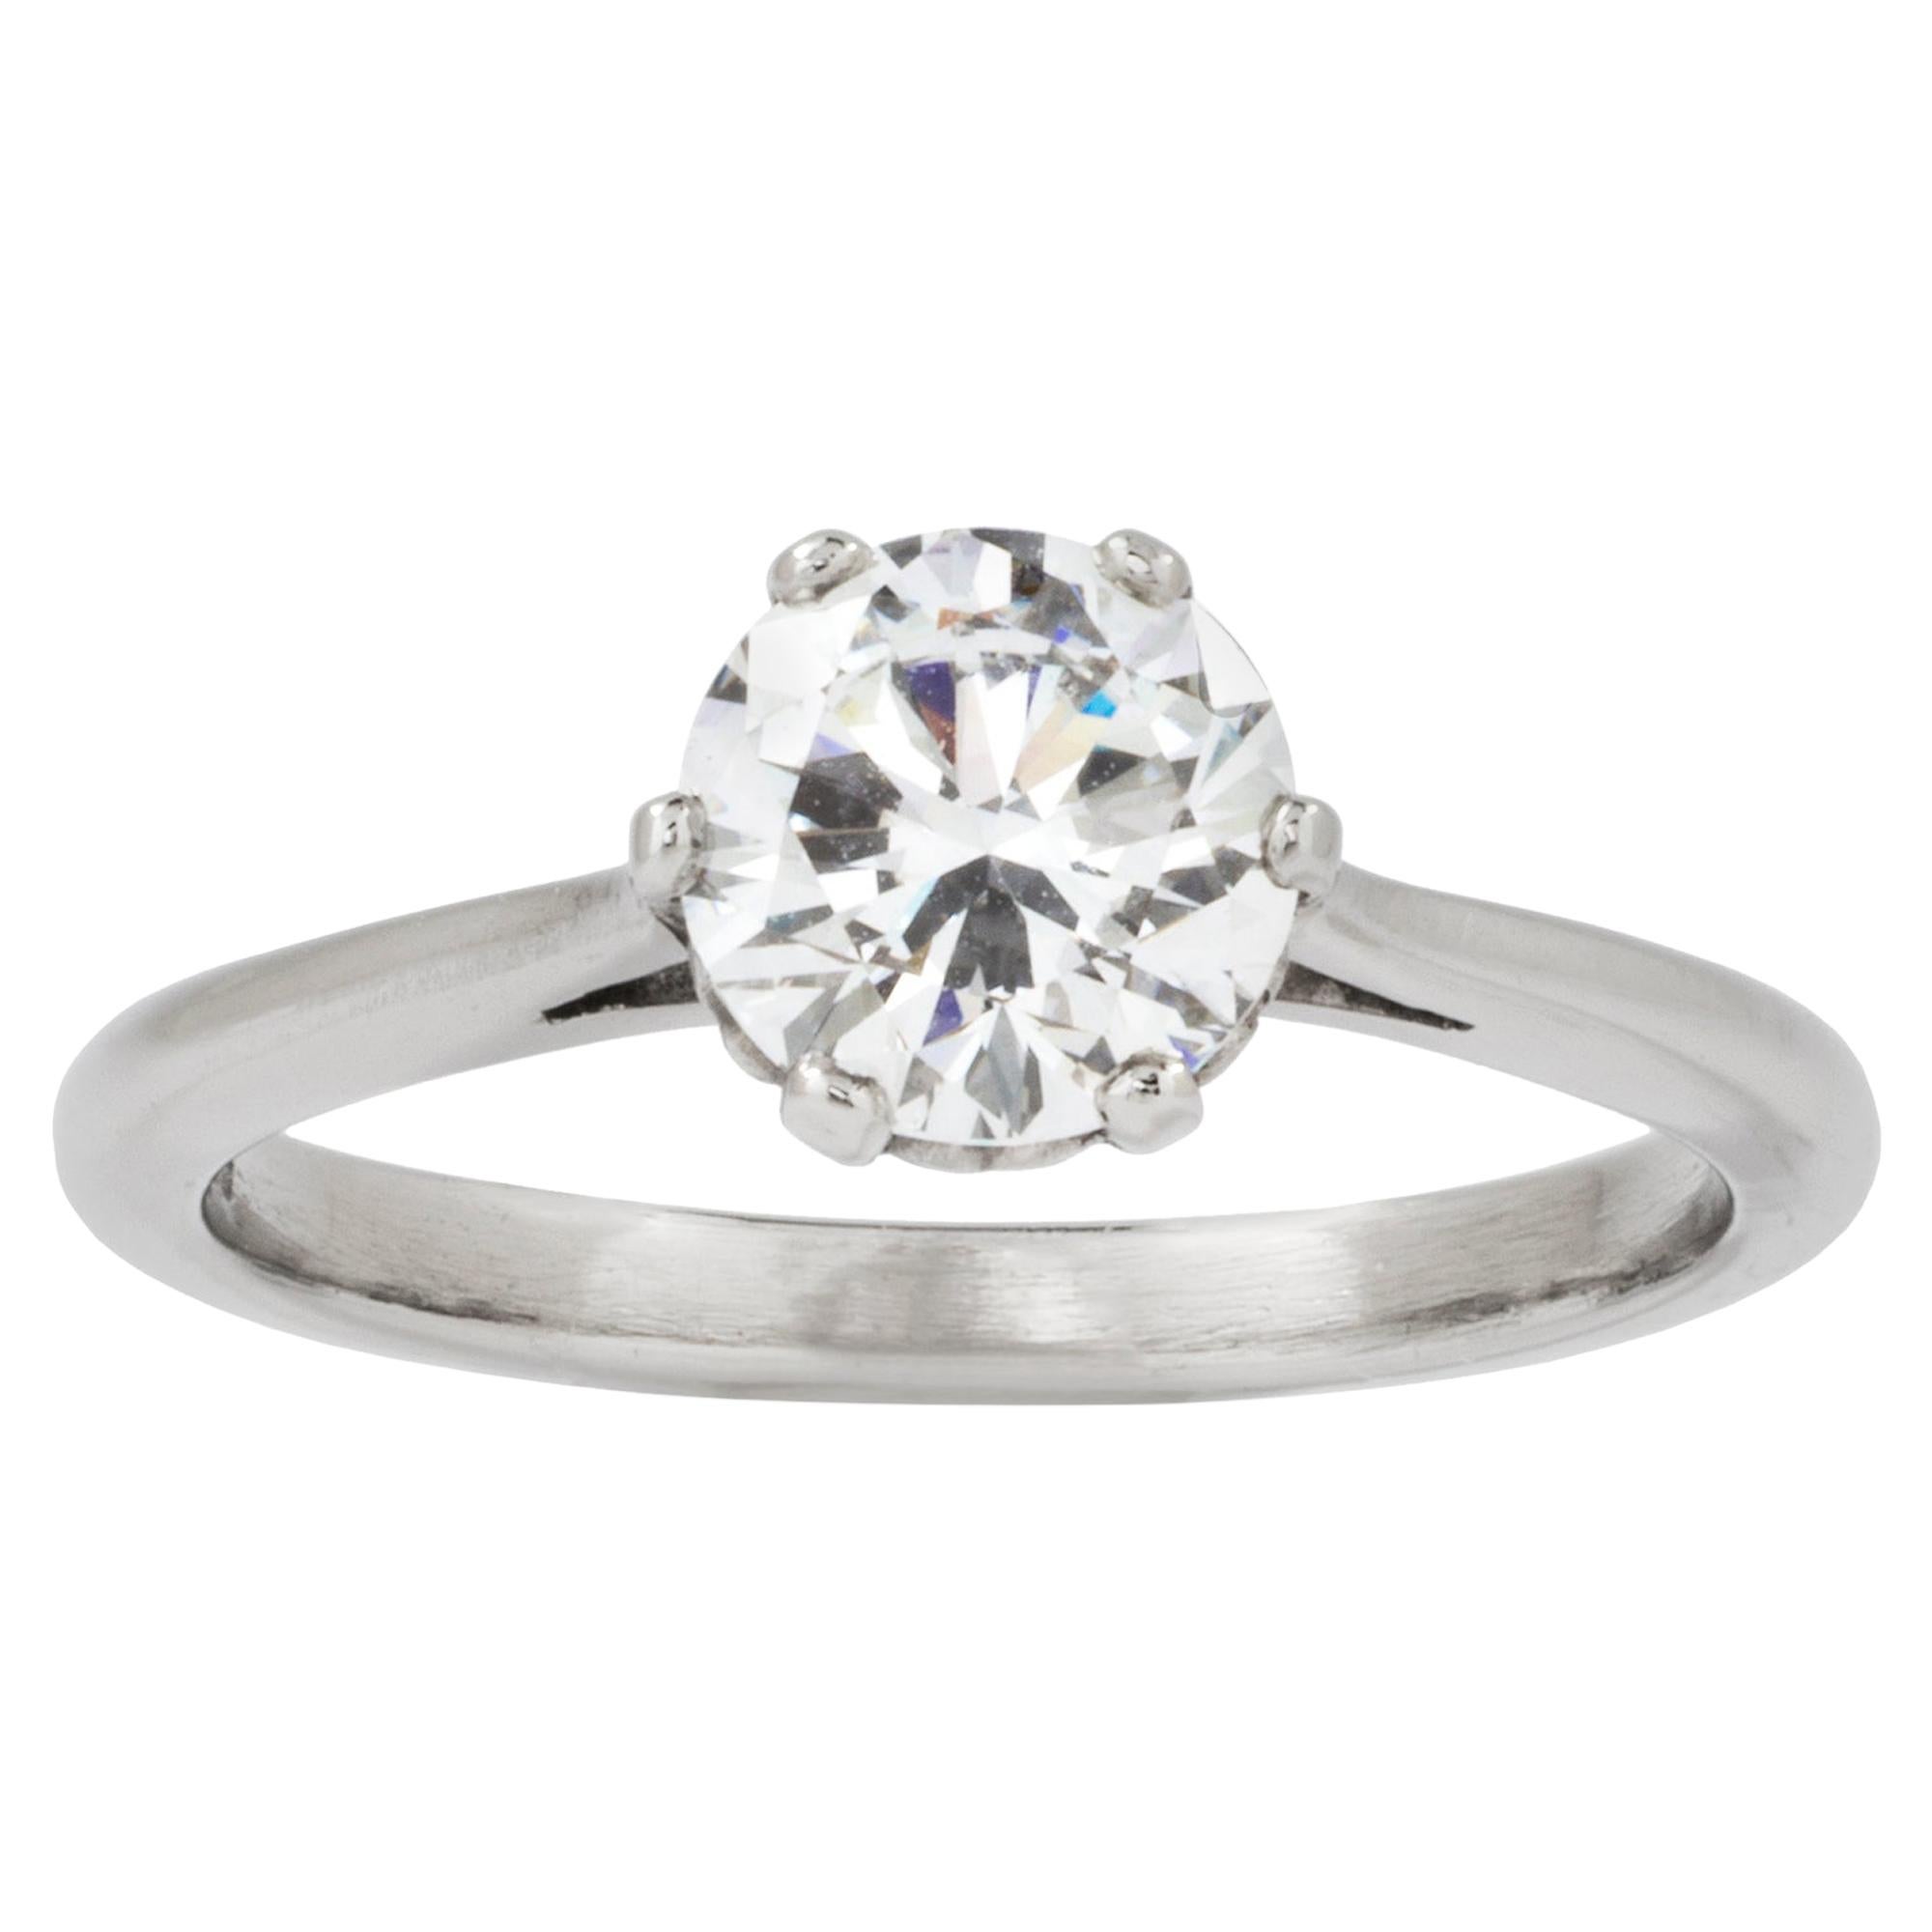 Gem-A Certified 0.89 Carat D Color Solitaire Diamond Ring For Sale